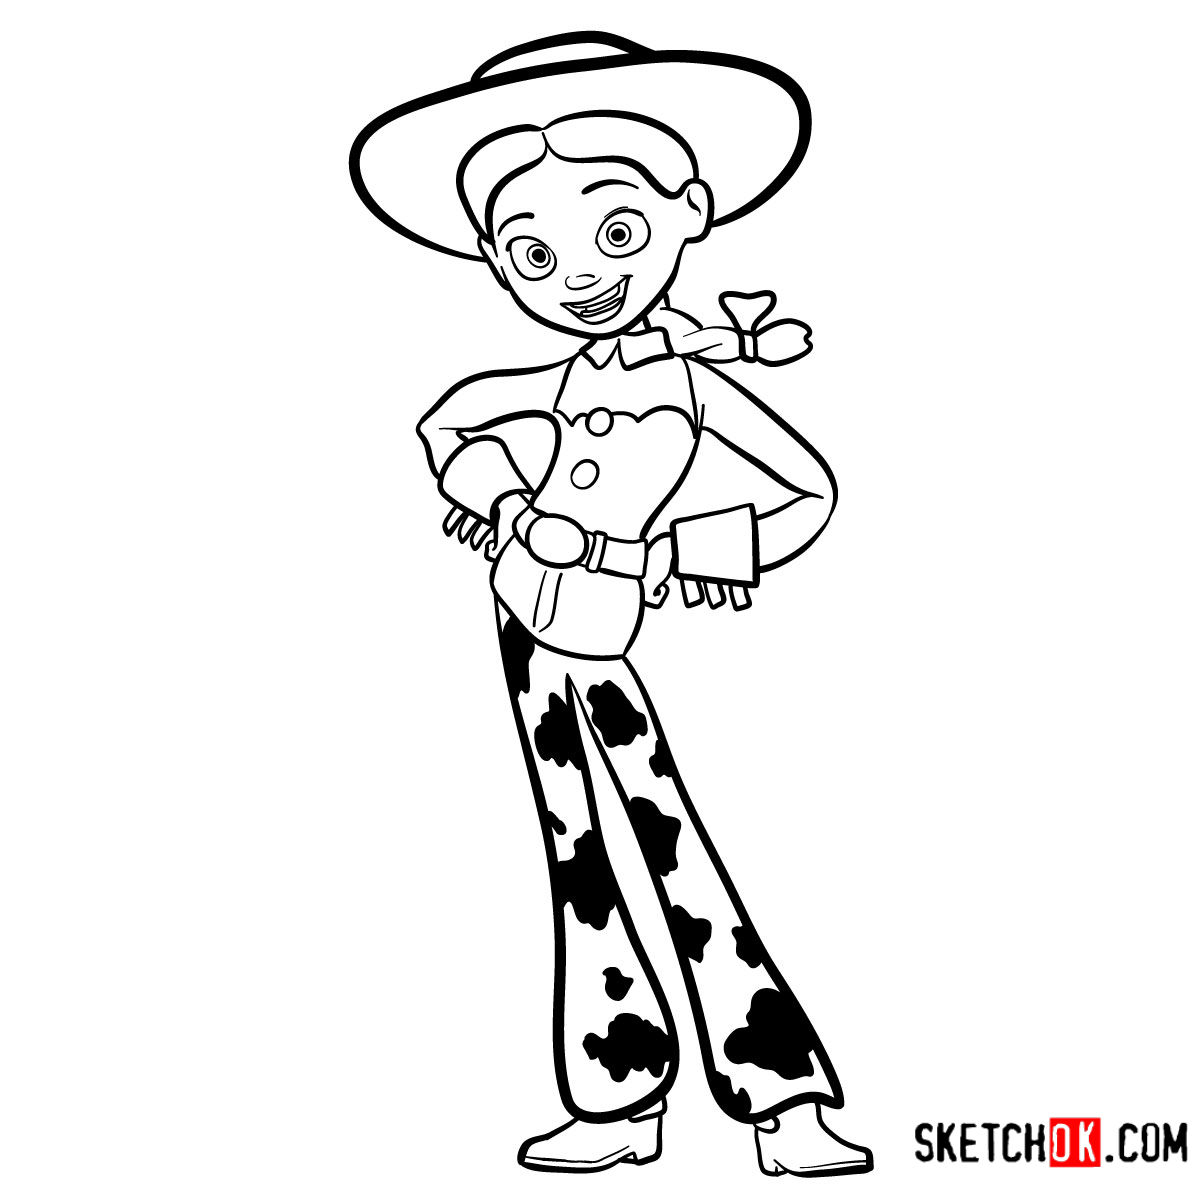 How to draw Jessie from Toy Story 2